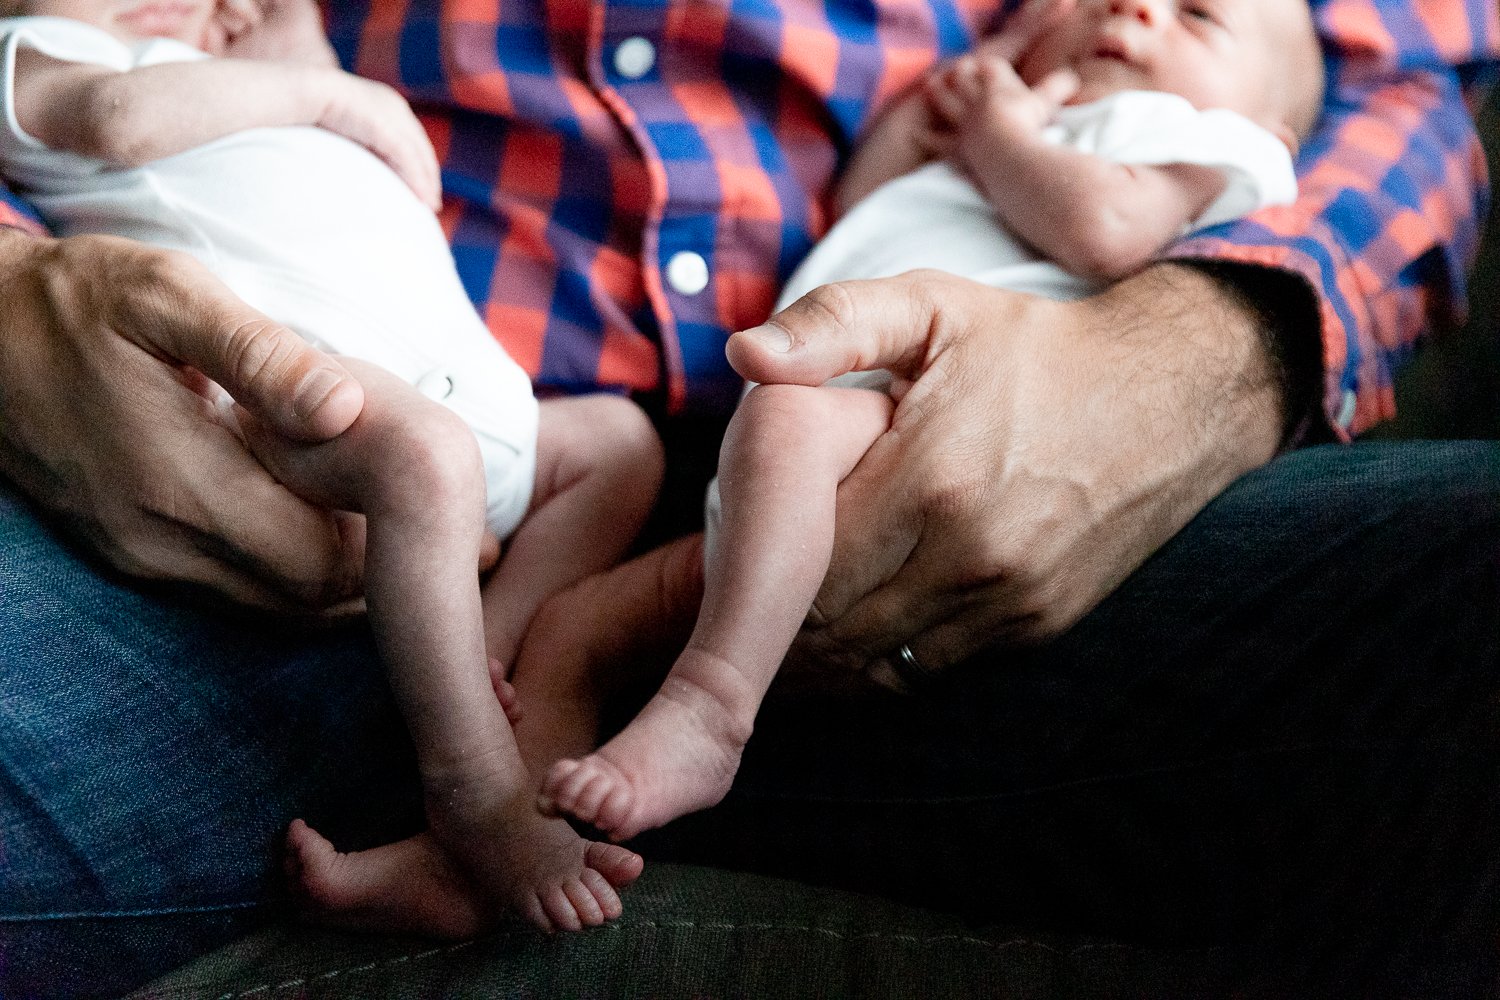 Newborn twins tiny legs, feet and toes